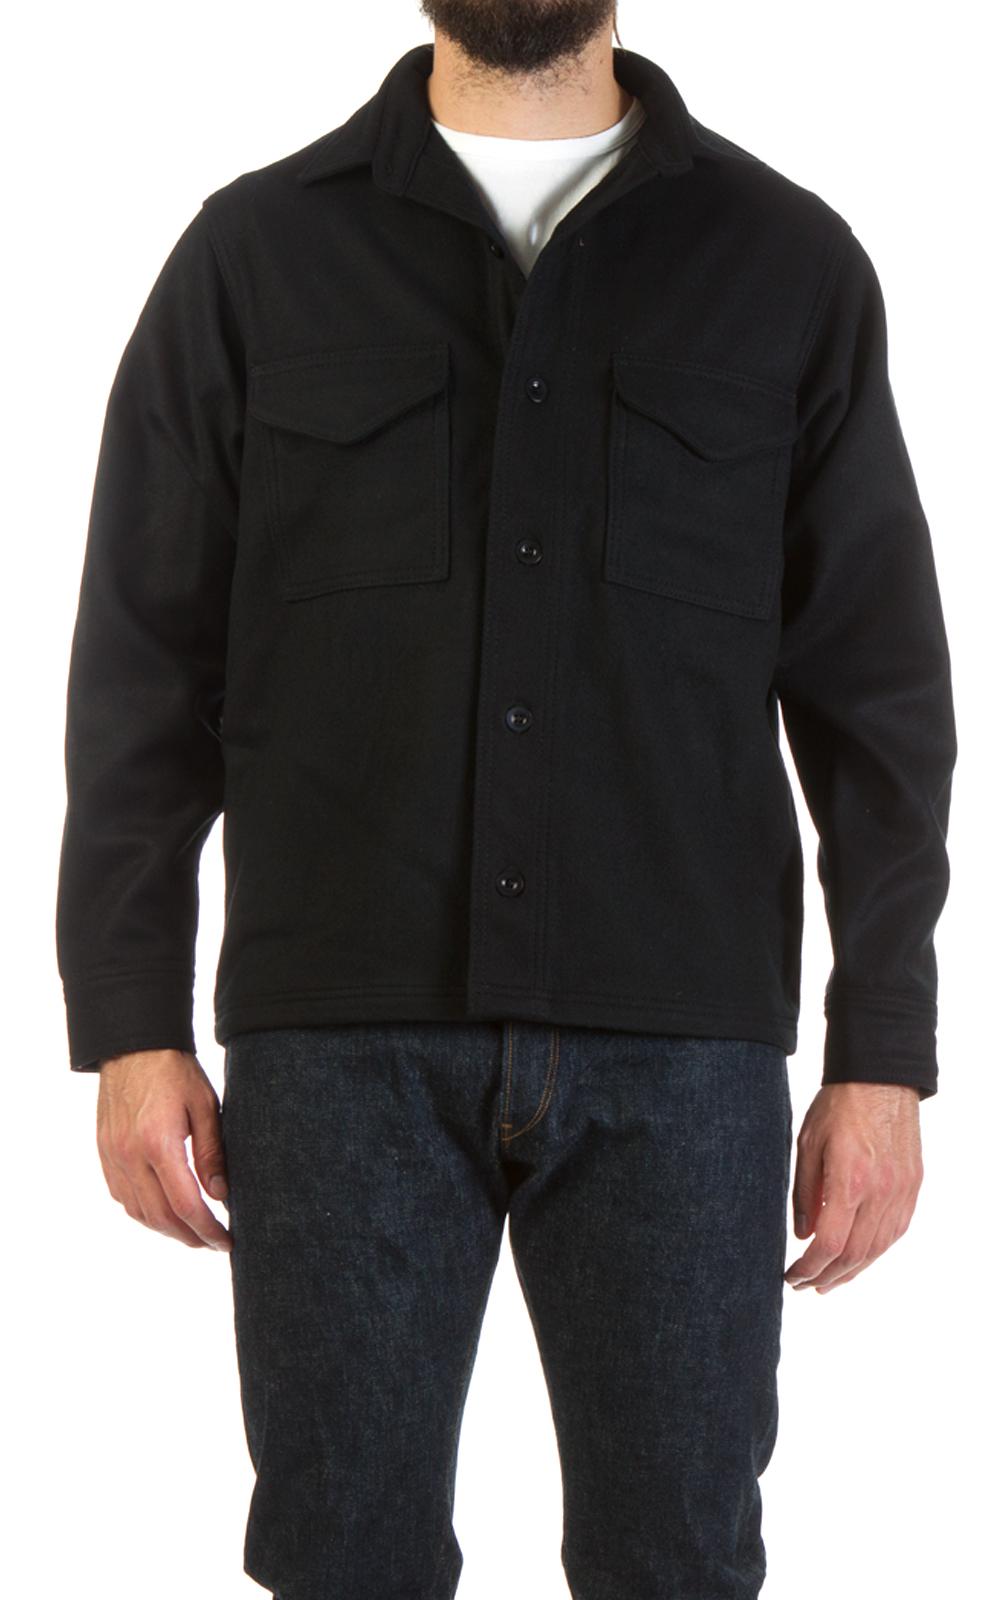 Filson Wool Jac-shirt Black for Men - Lyst